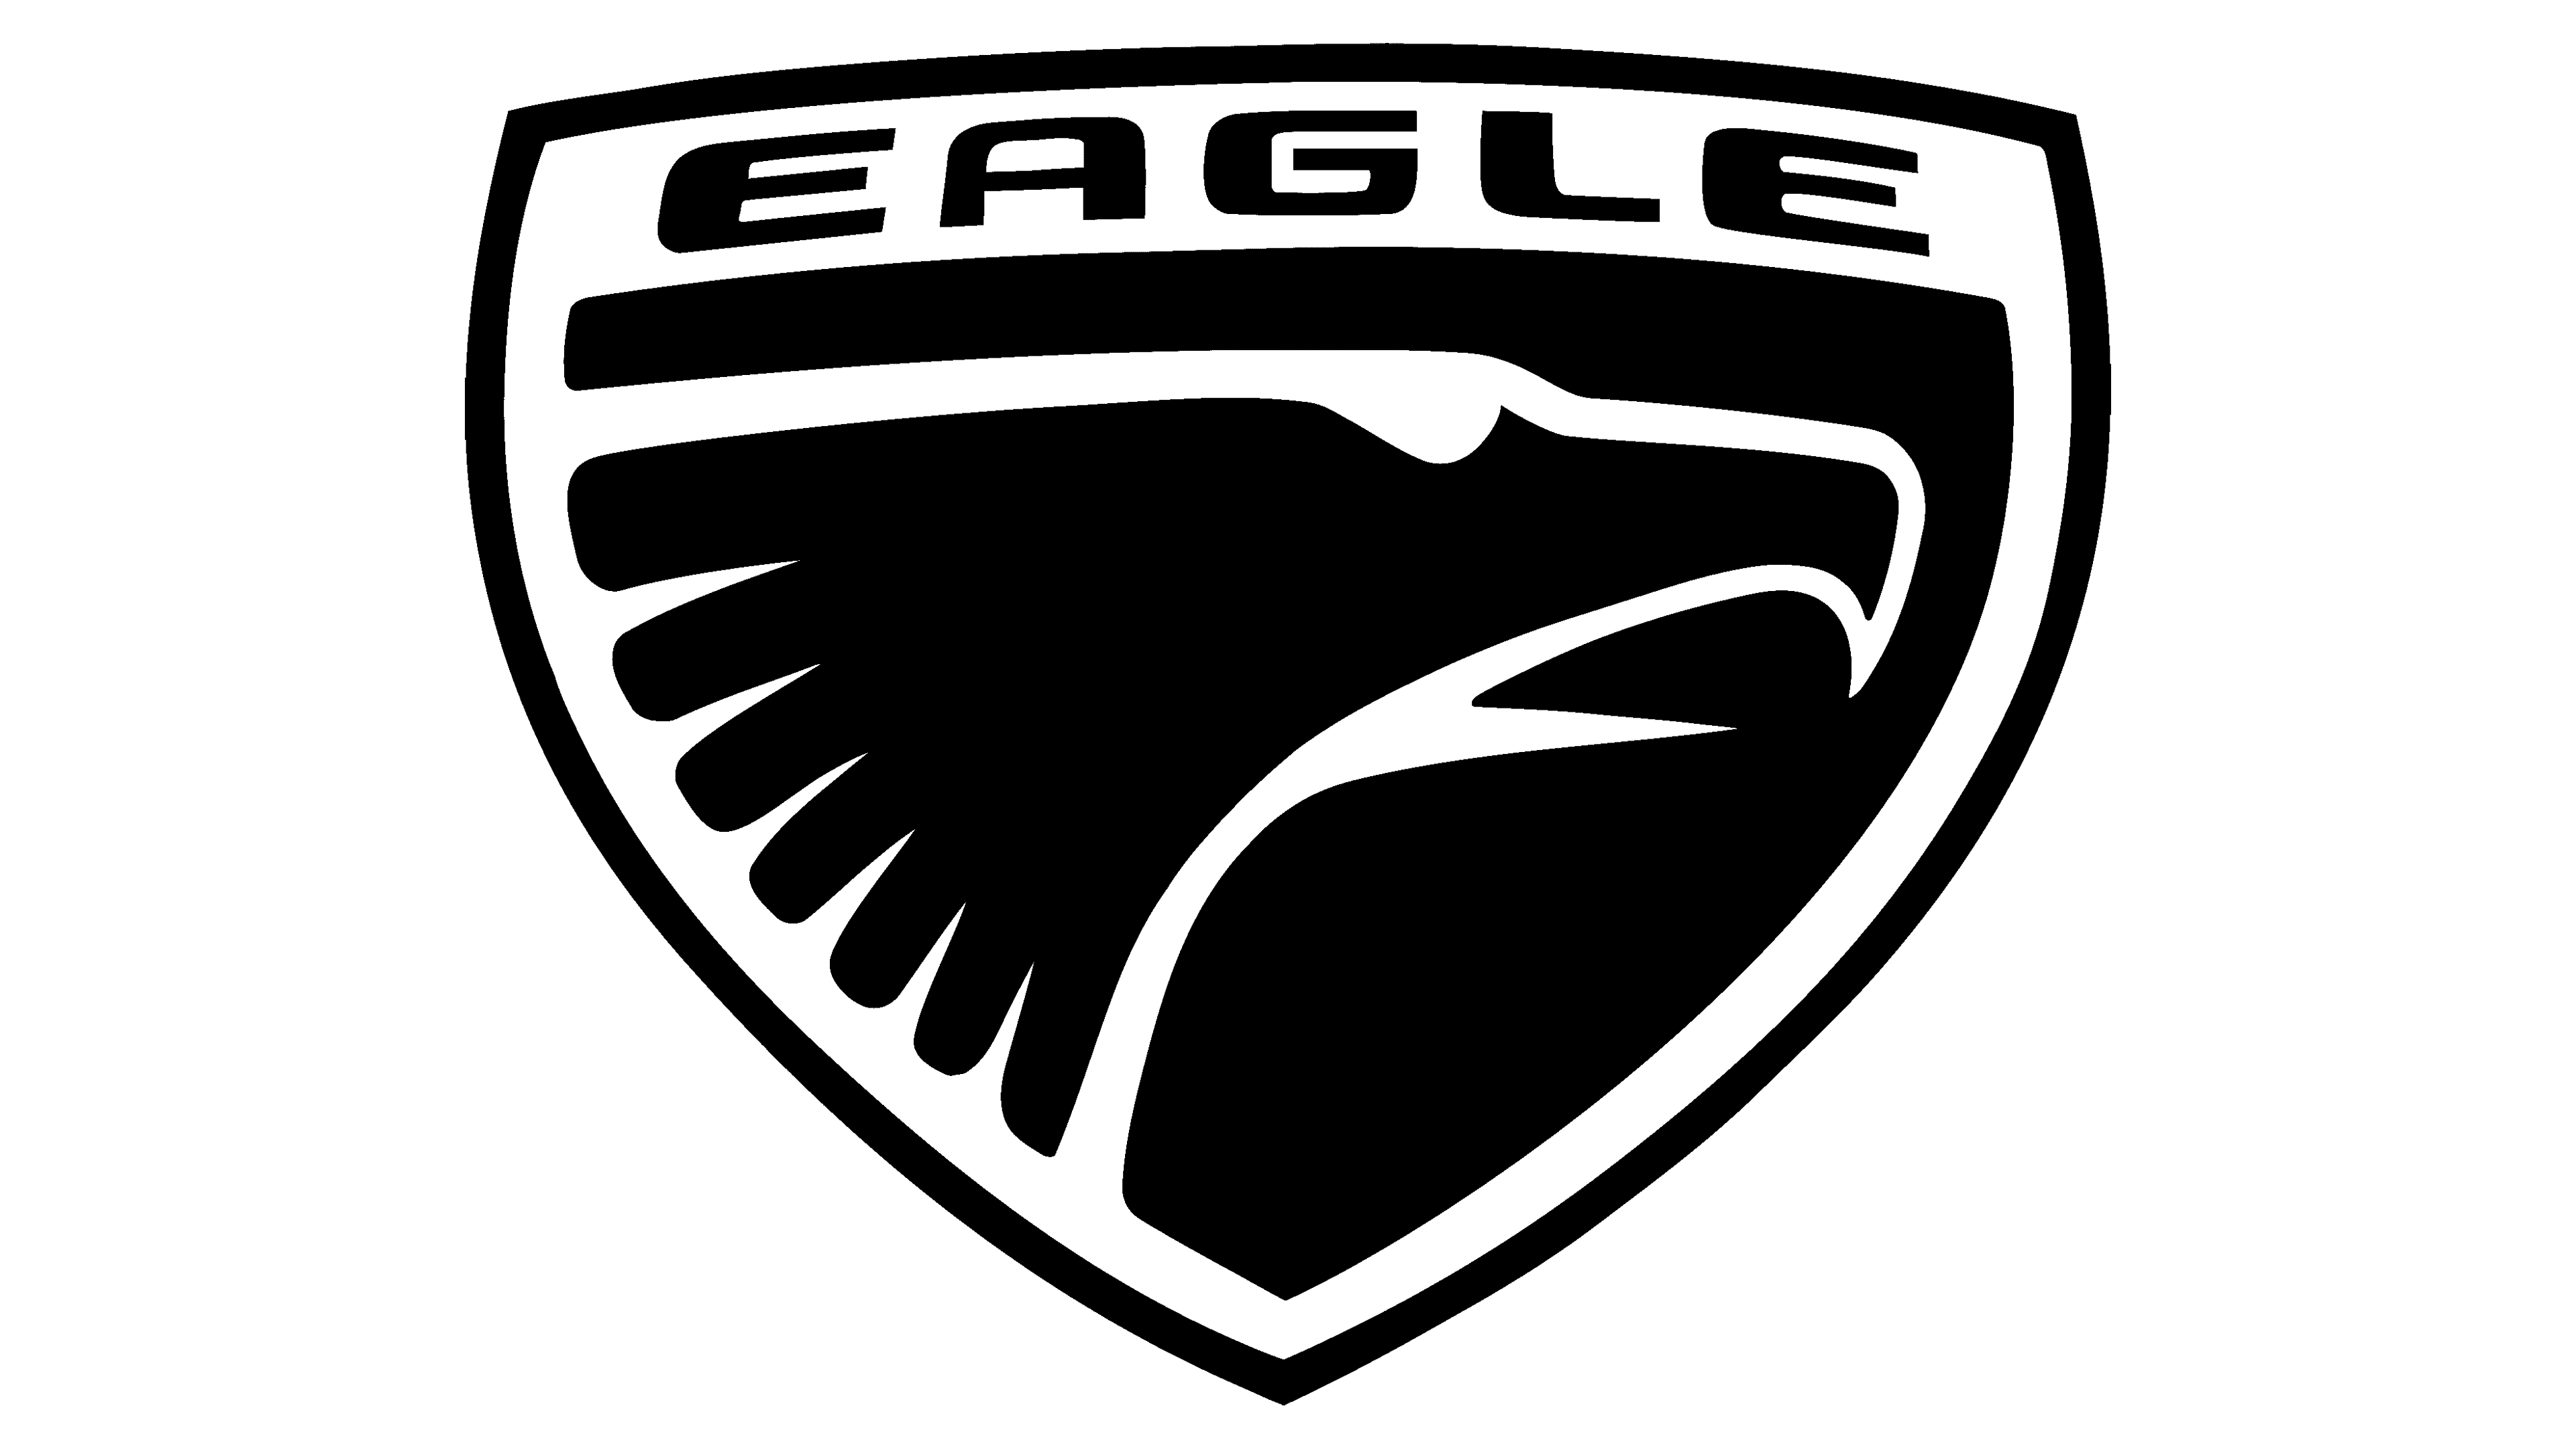 Golden Eagle with Shield Logo Design Stock Vector - Illustration of  background, falcon: 176940818